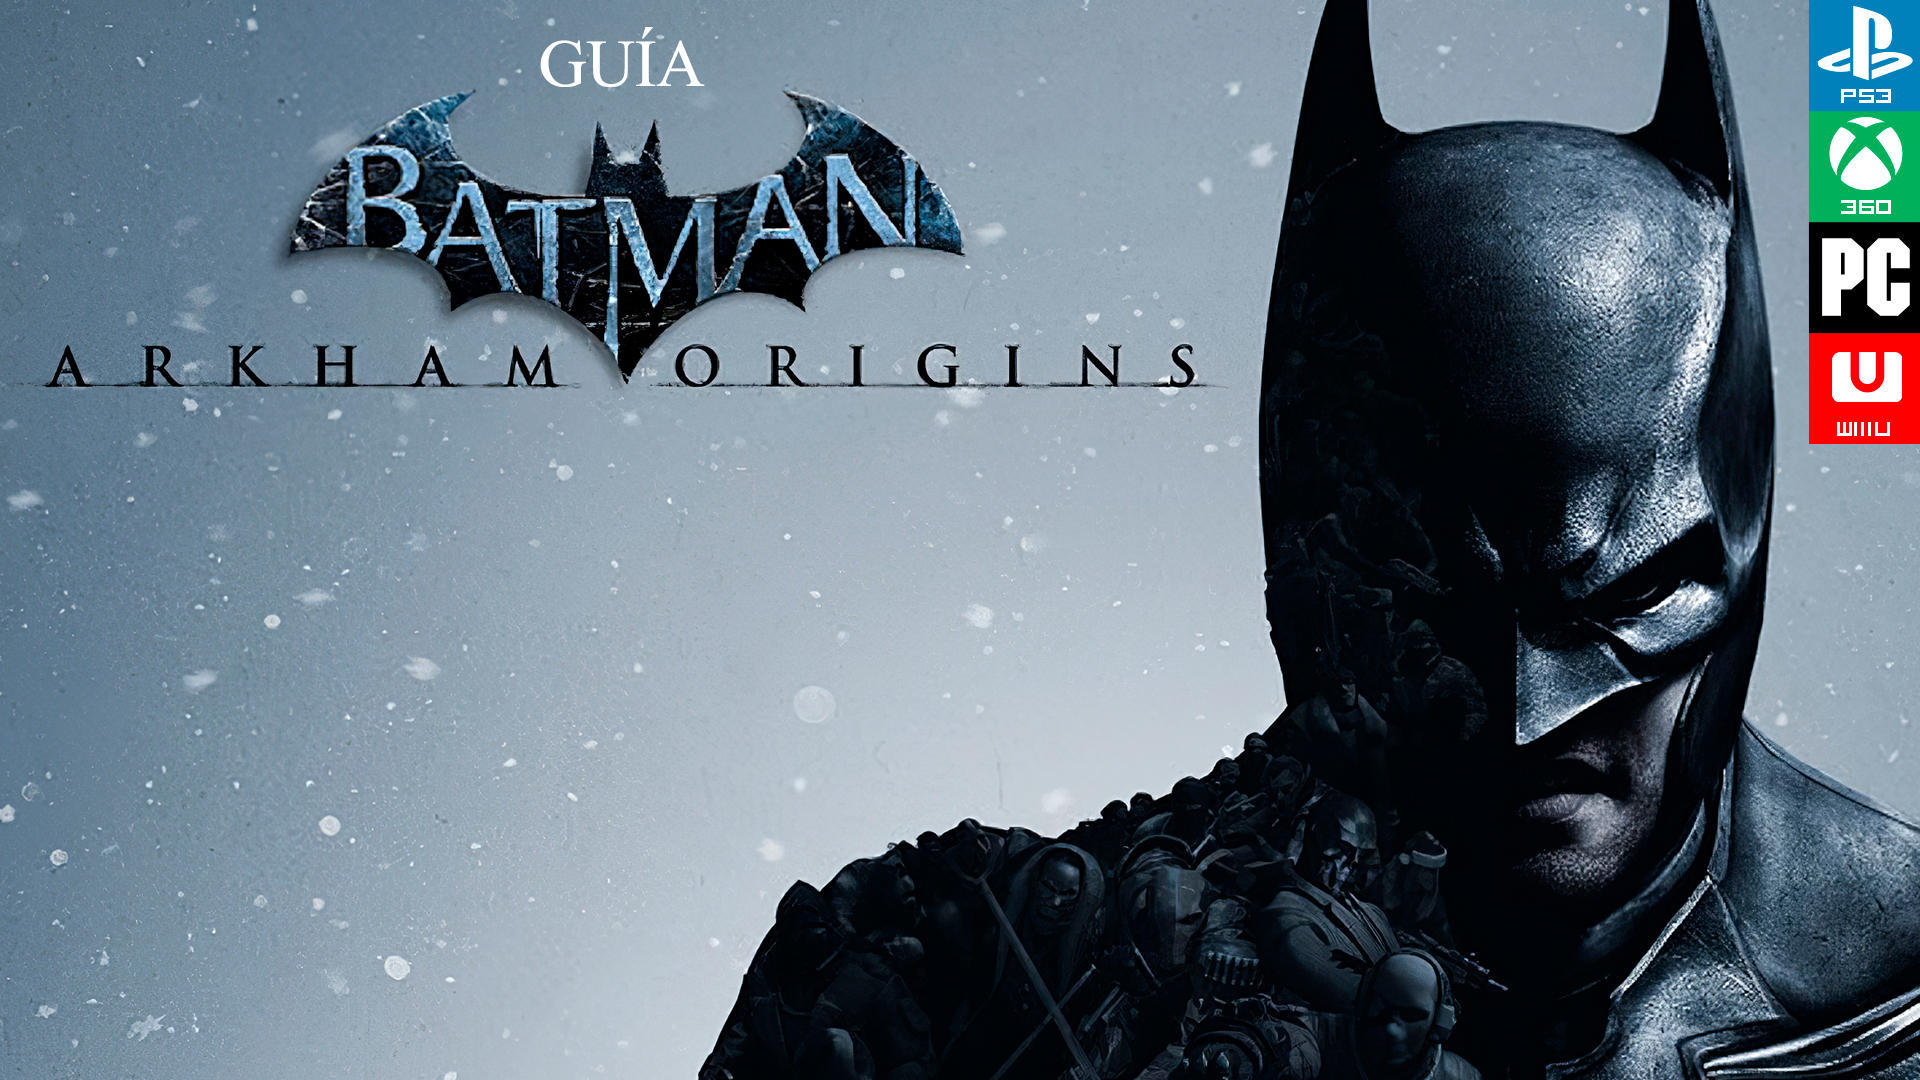 Investiga el hotel Royal de Gotham Batman Arkham Origins - Guía